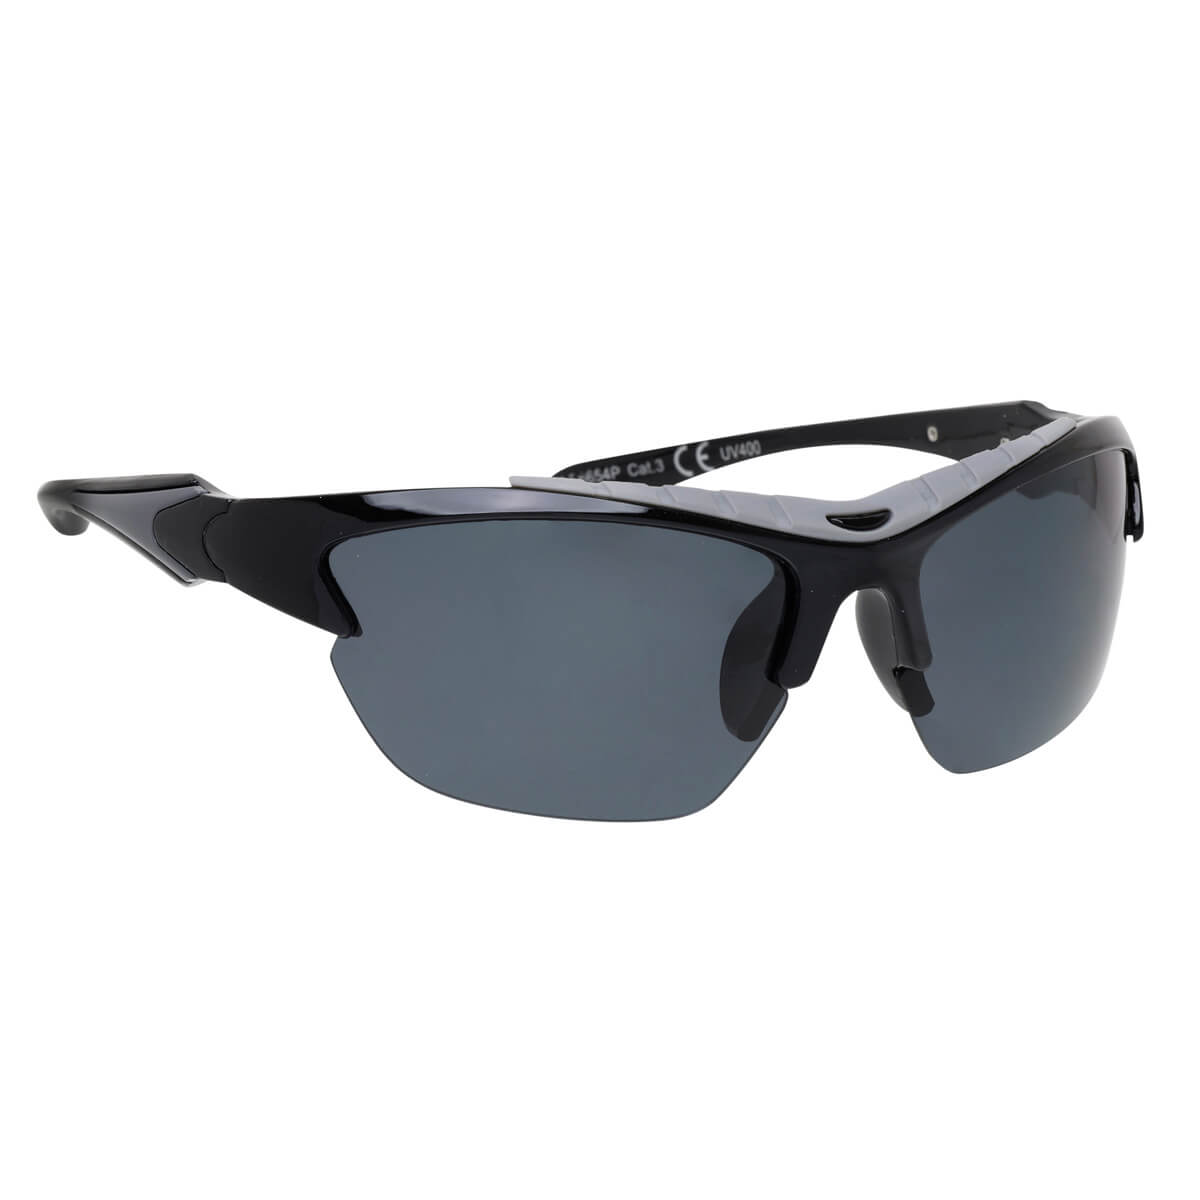 Polarized sports sunglasses